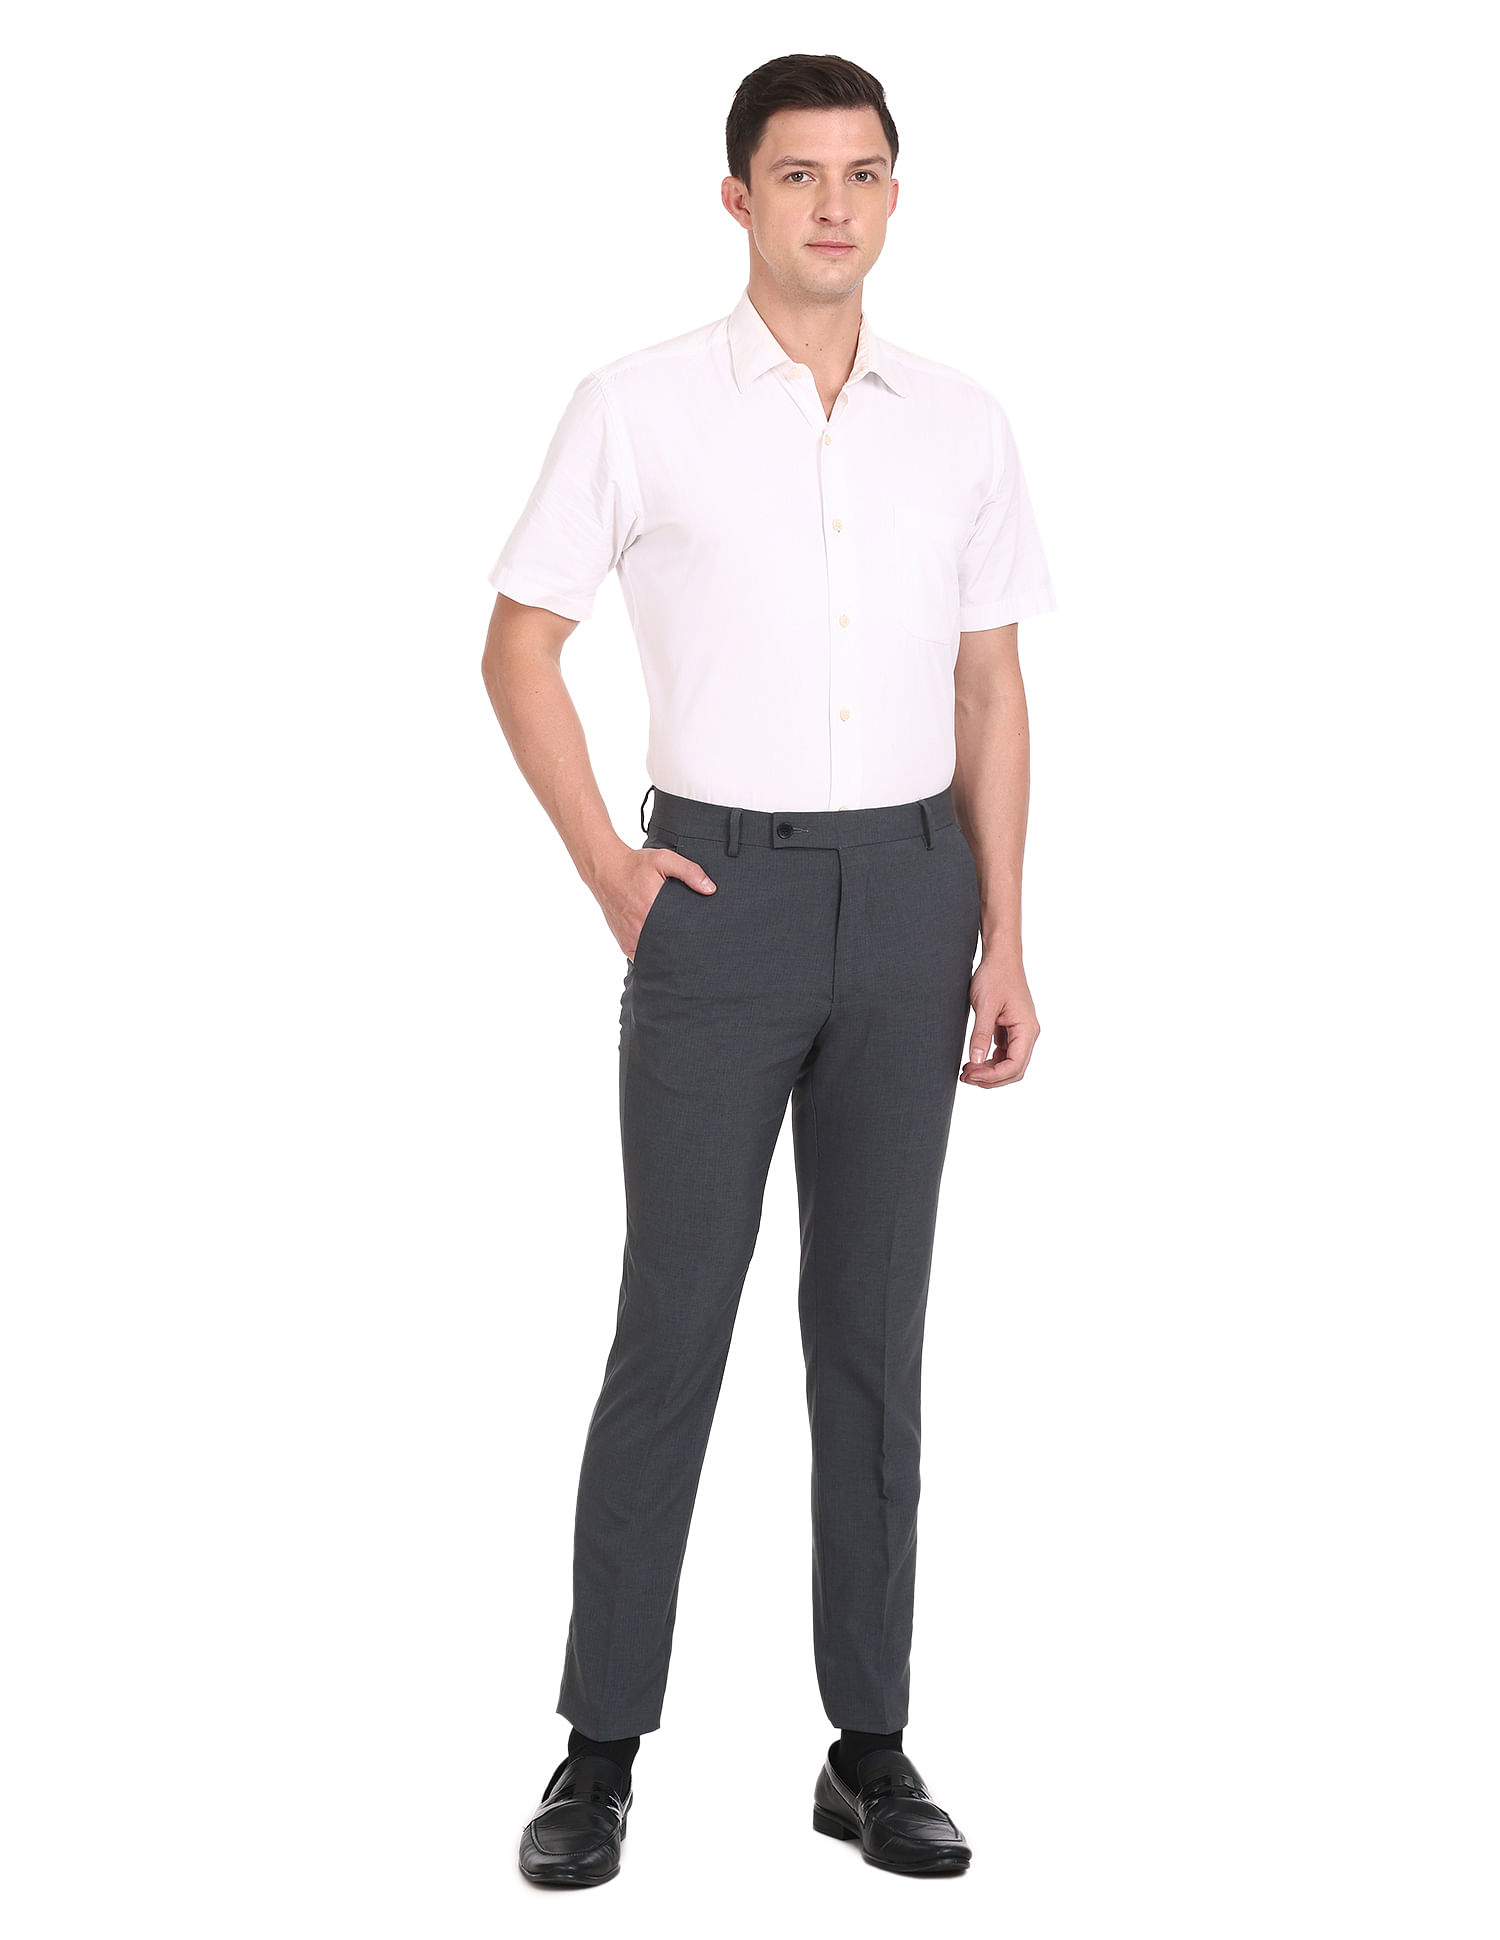 Looka33 Men Pants Casual Fashion Half Size Elasticated Waist Combat 34  Long Knee Length Pocket Shorts TrousersKhakiM  Amazonin Clothing   Accessories